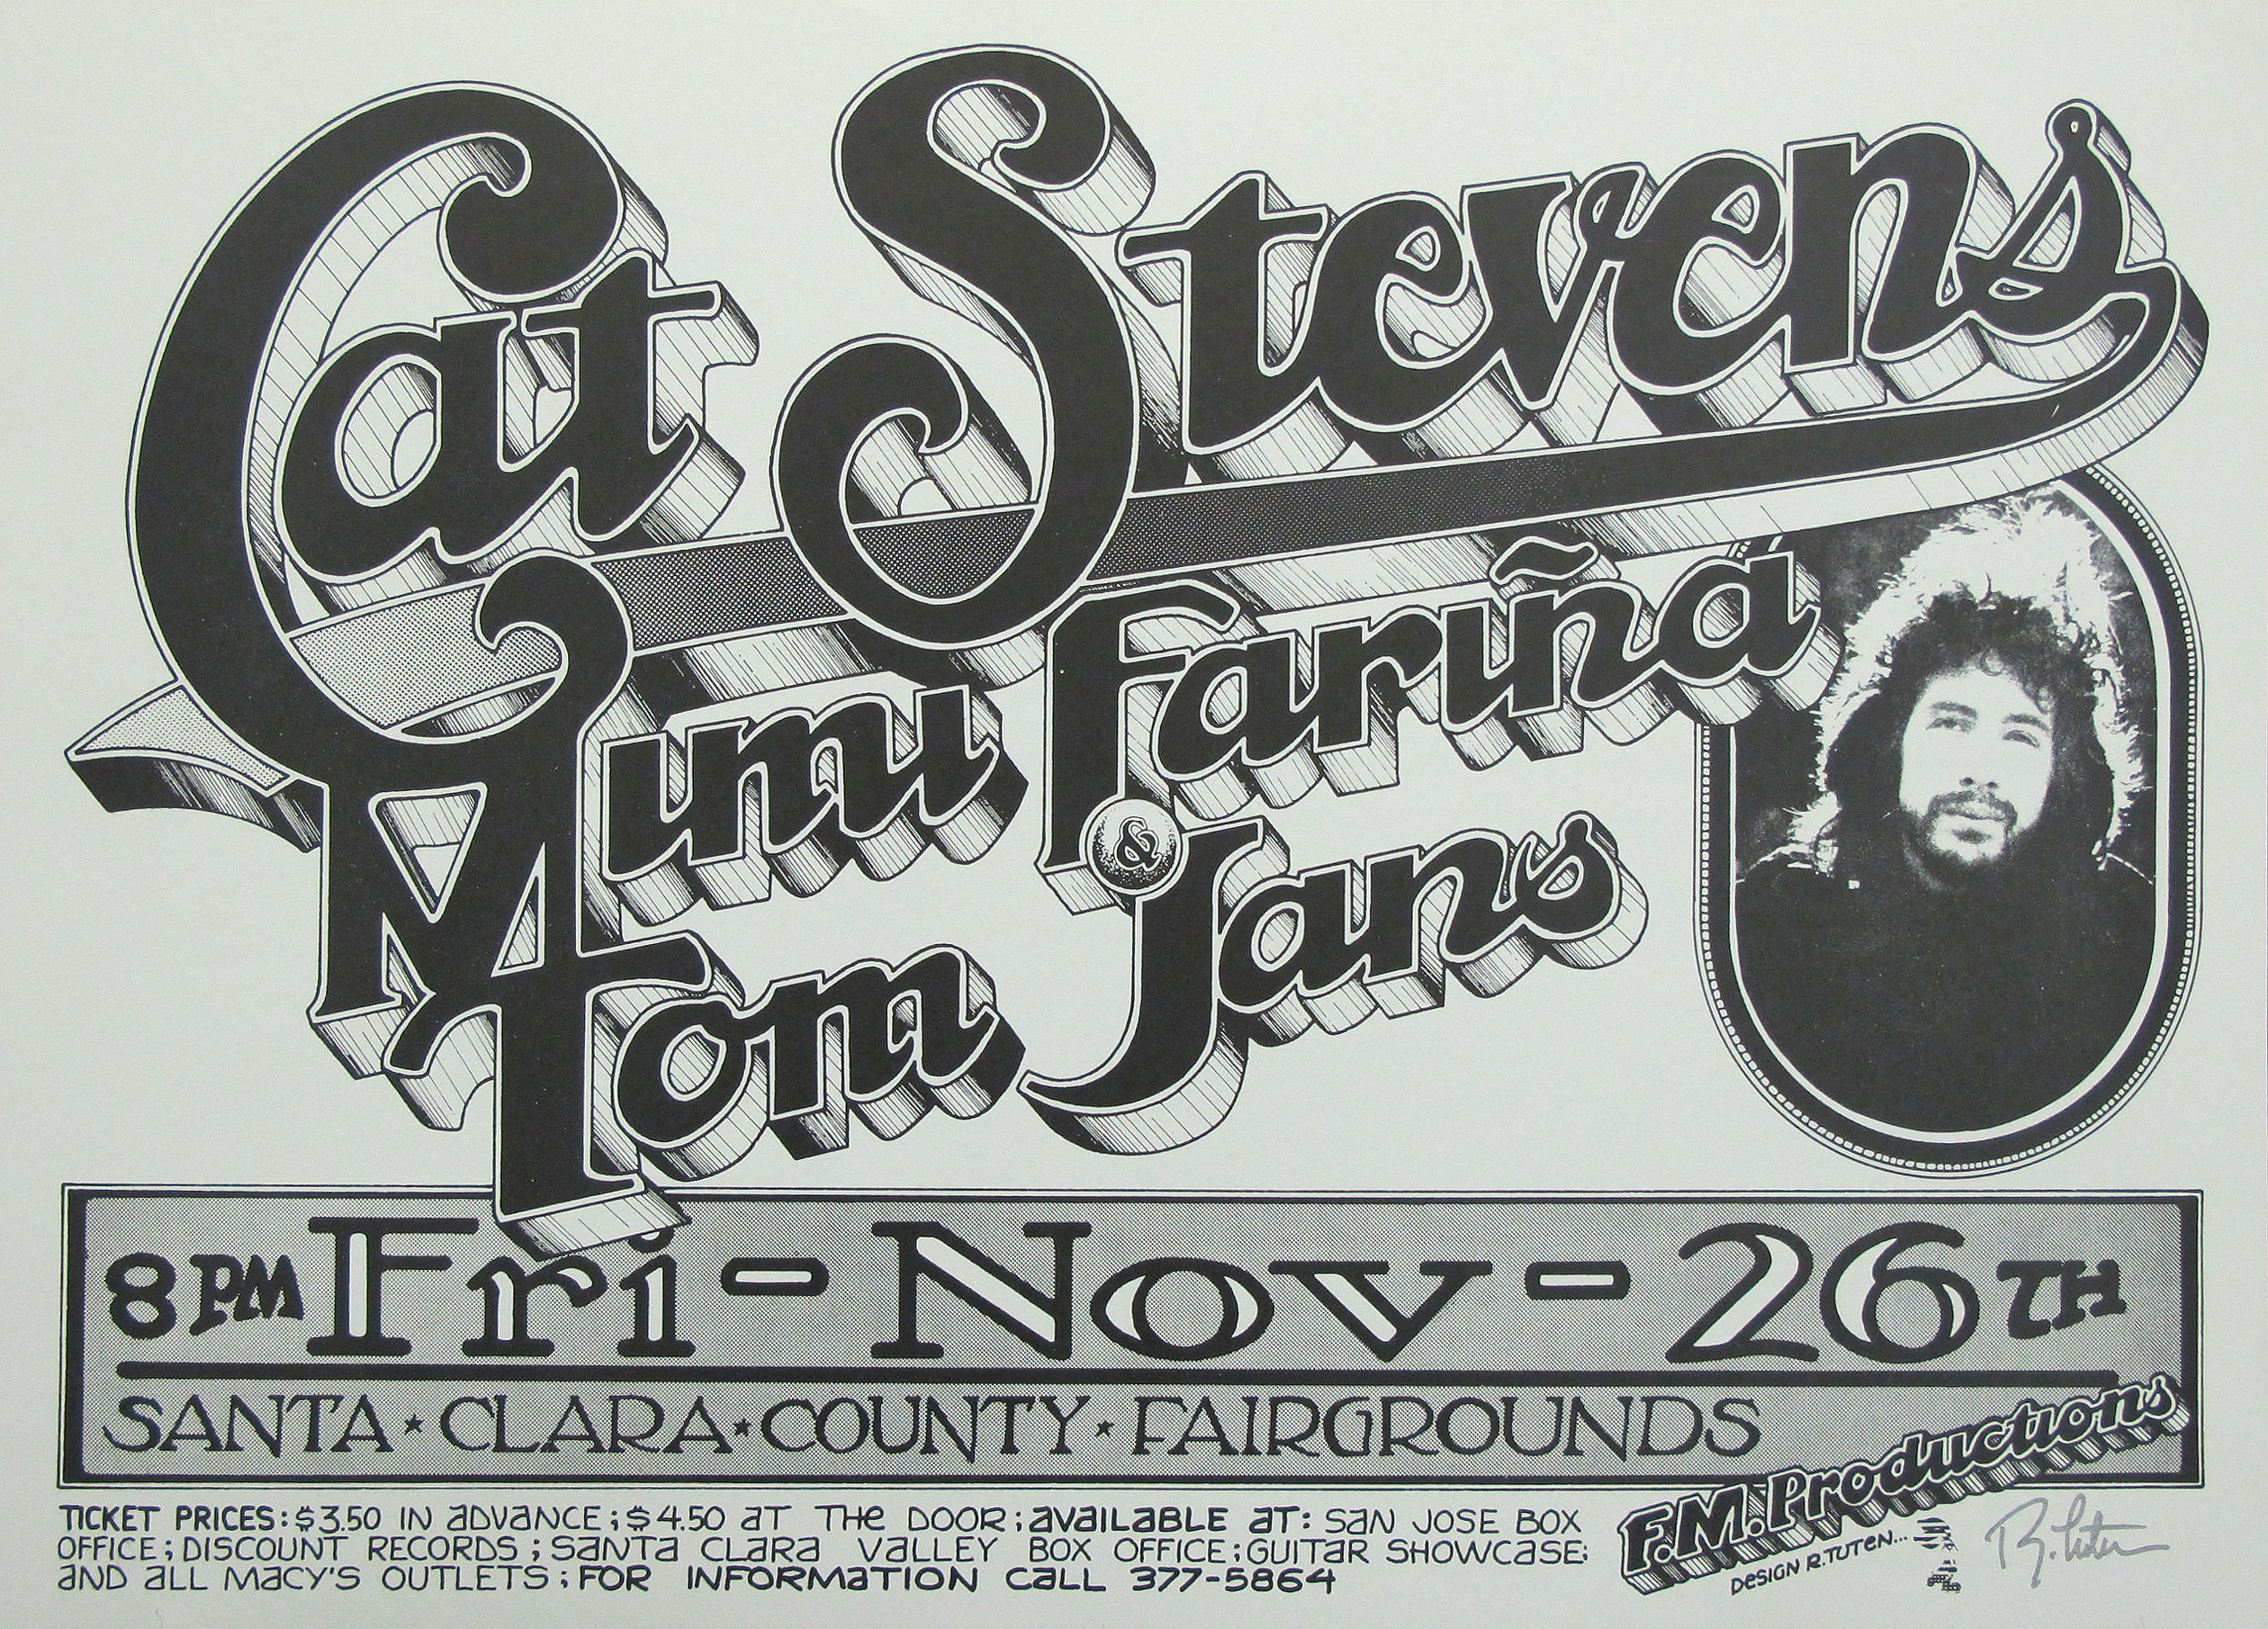 Cat Stevens Rock Concert Poster